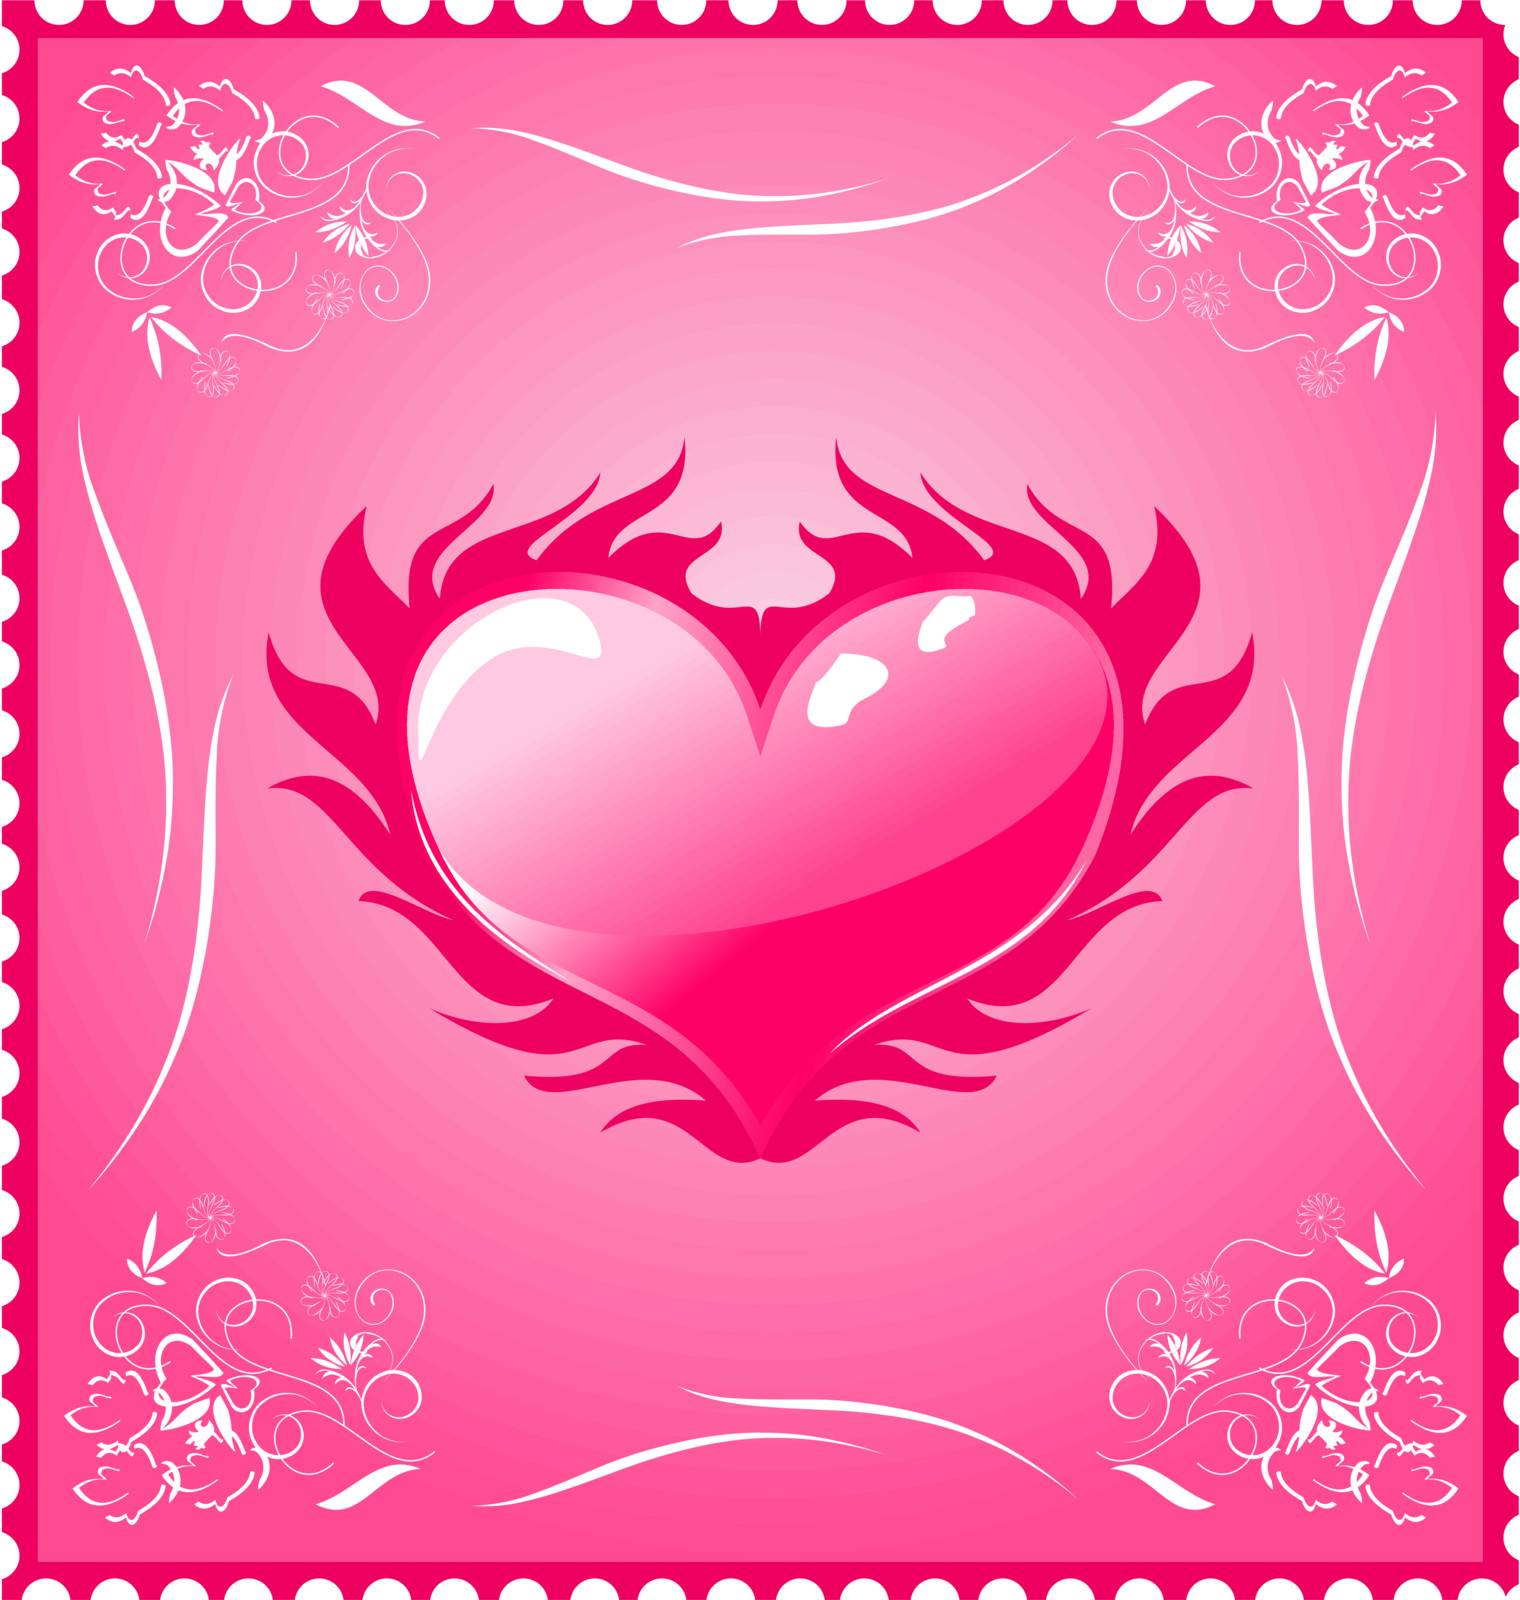 Illustration romantic stamp for Valentine's day - vector